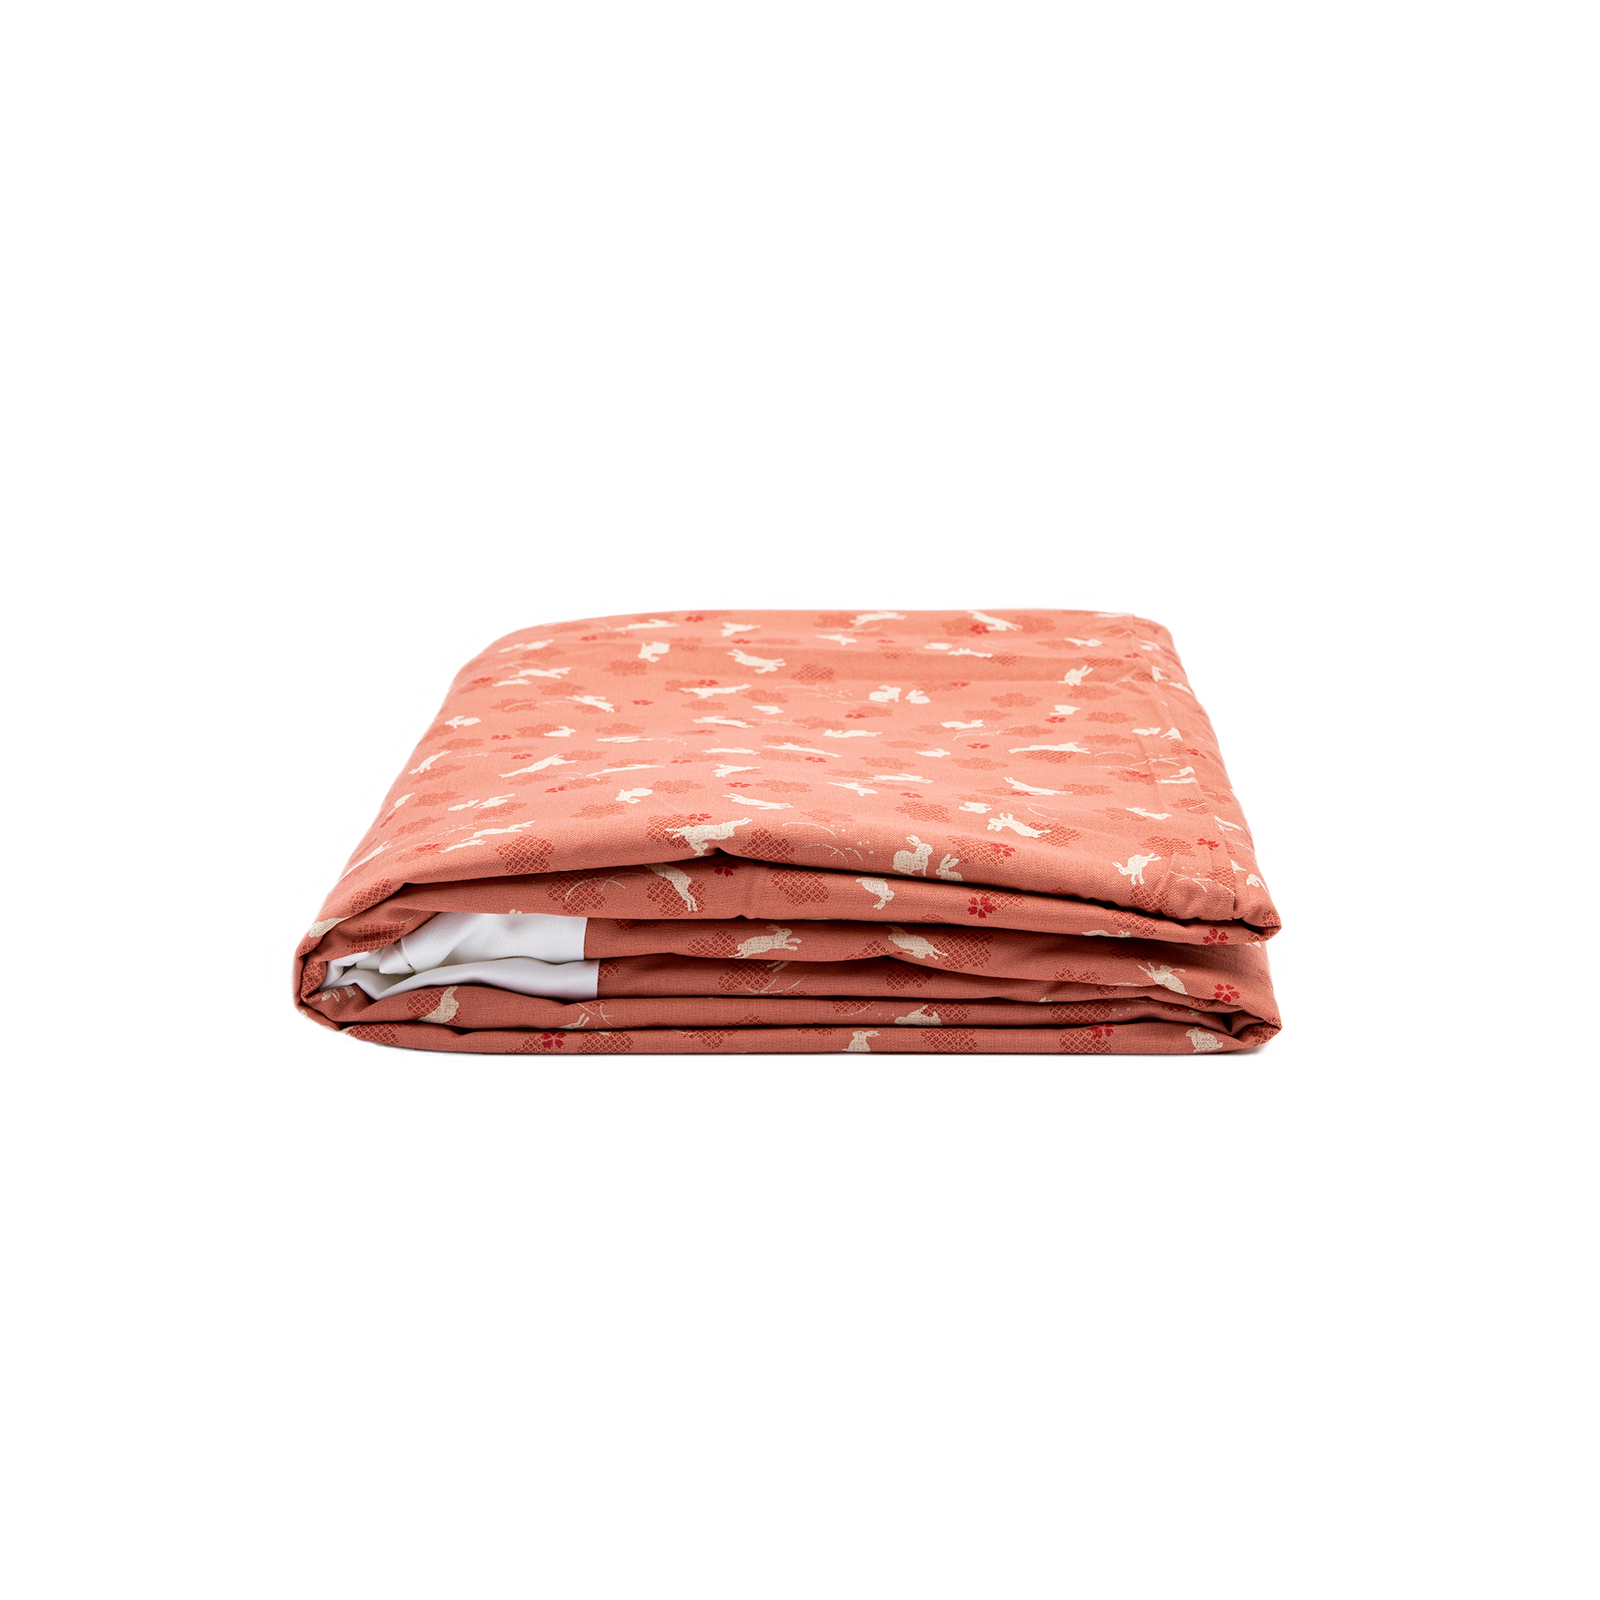 J-Life Usagi Pink Custom Kakefuton with Removable Cover_Kakefutons_Kakefuton with custom cover_Japan Tradition